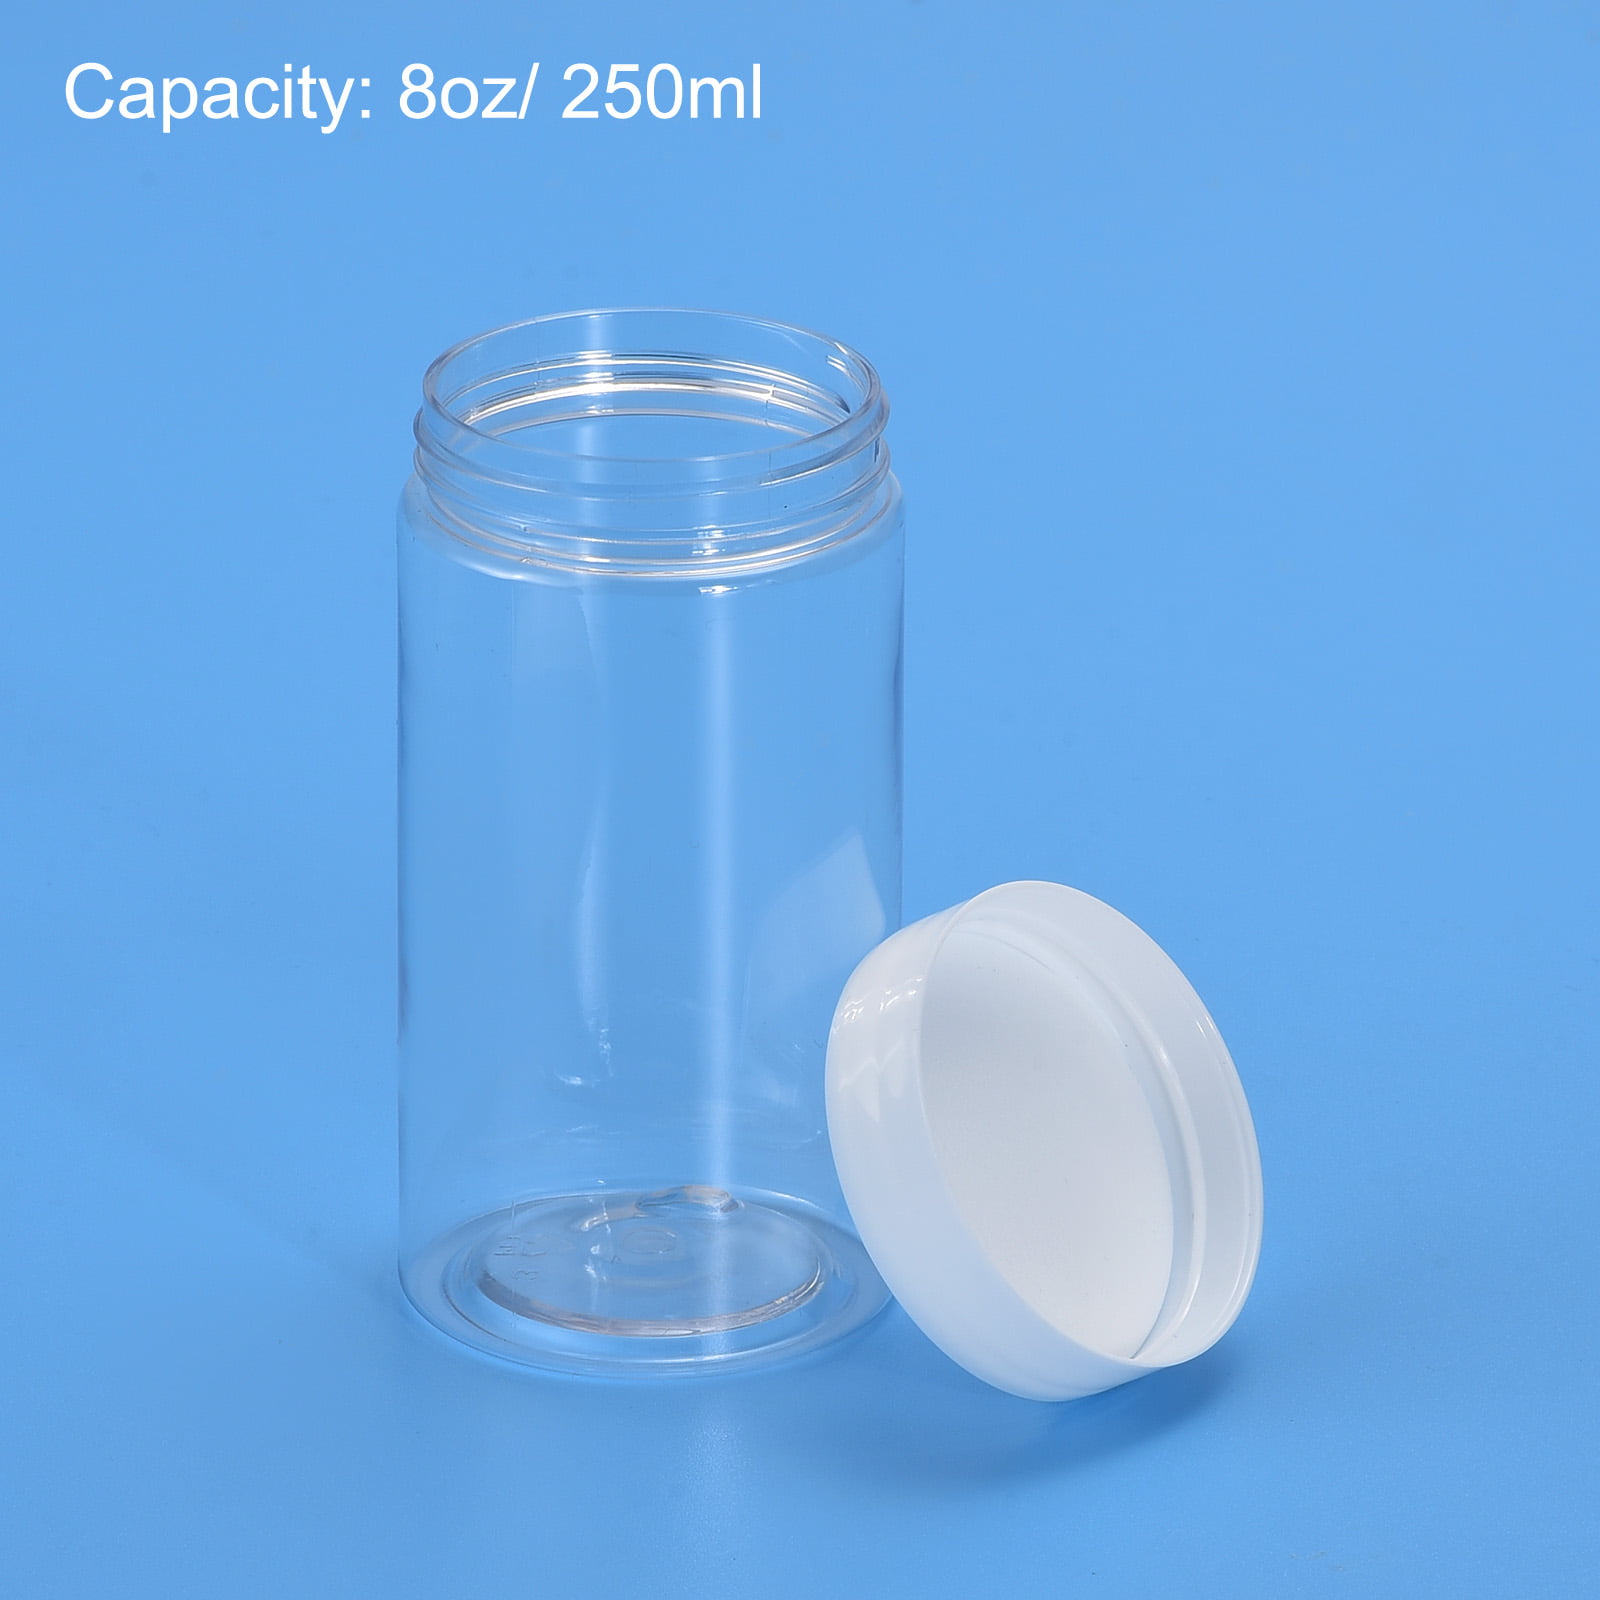 Clear Short Screw Top Pet Jar 12 oz | Quantity: 192 by Paper Mart, White